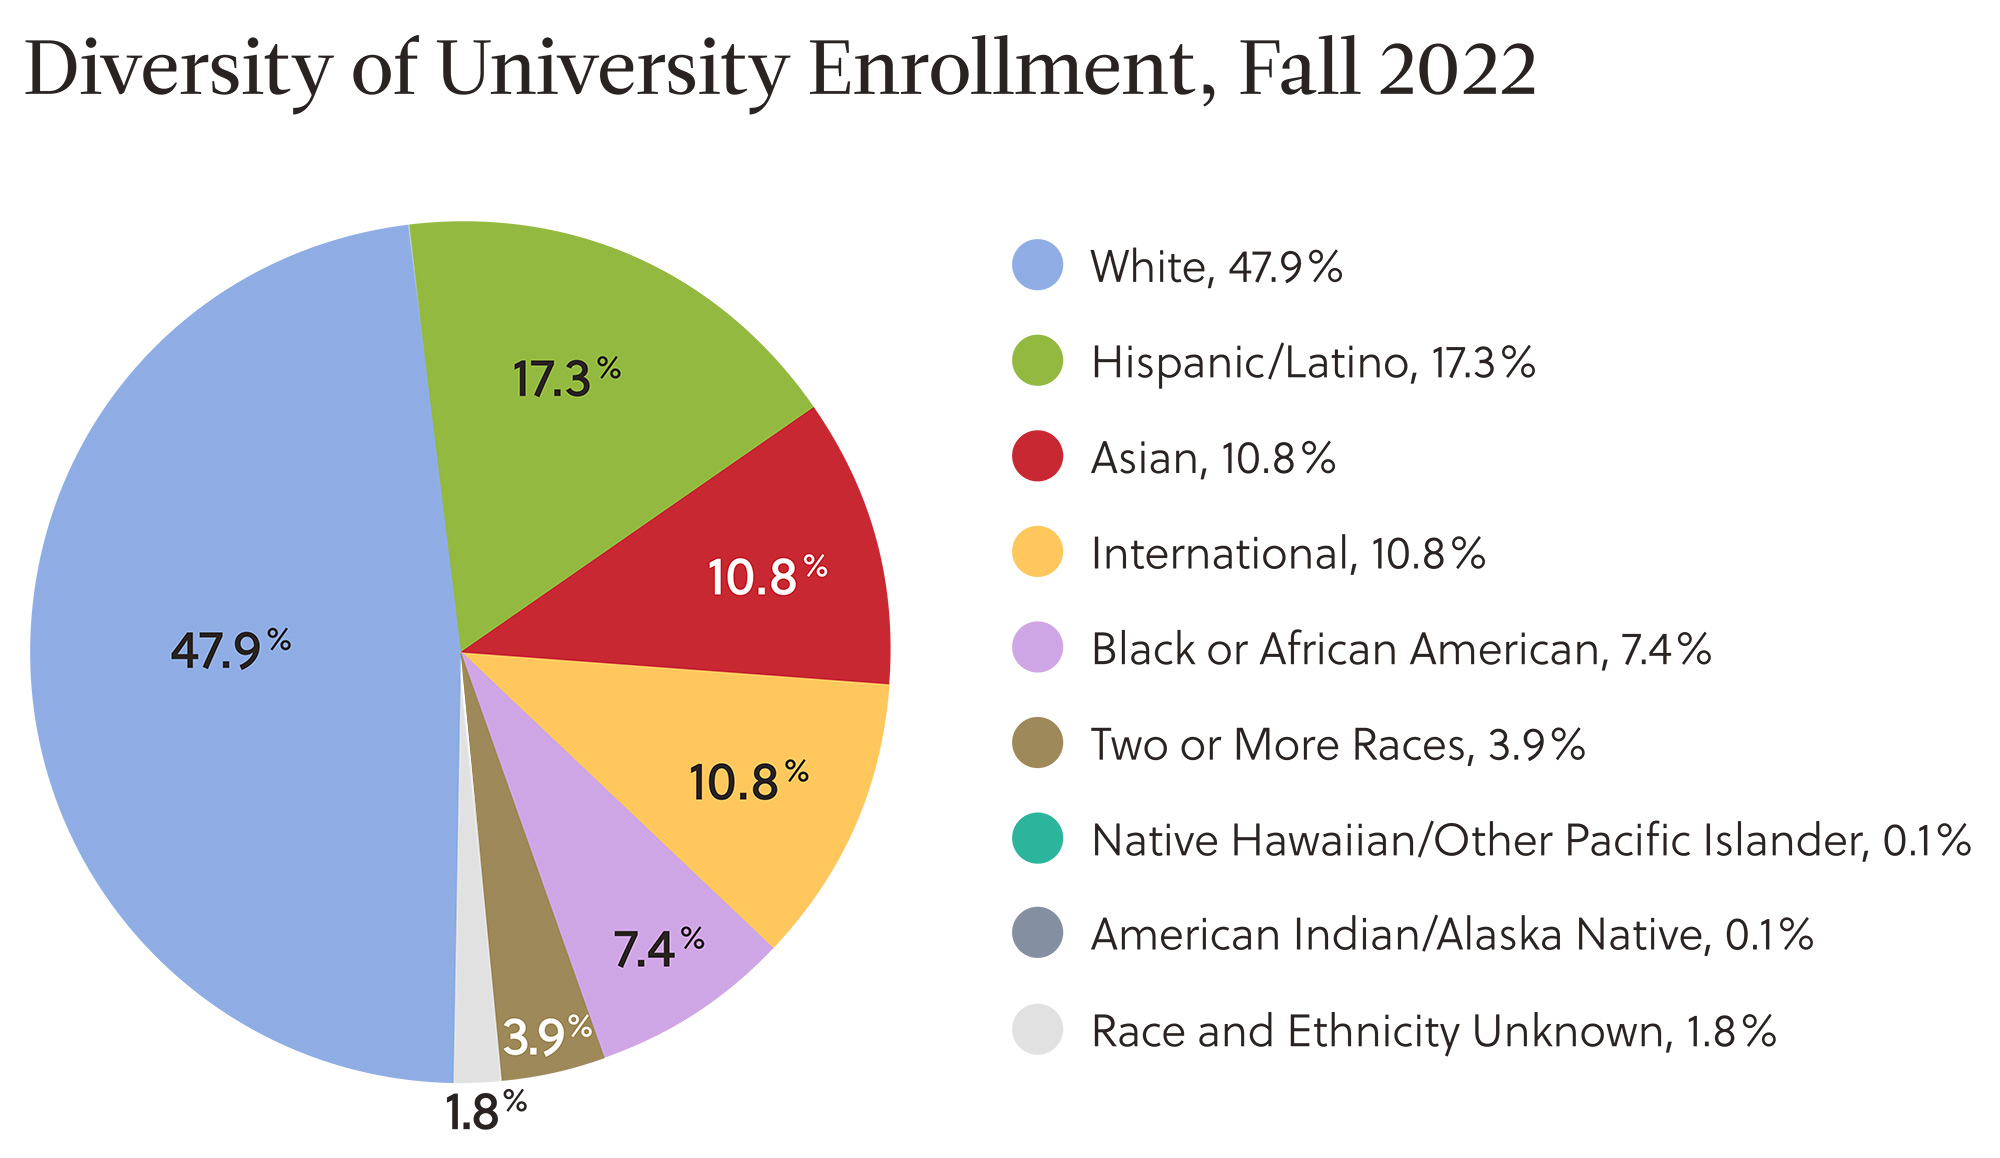 Fall 2022 University Enrollment by Race/Ethnicity